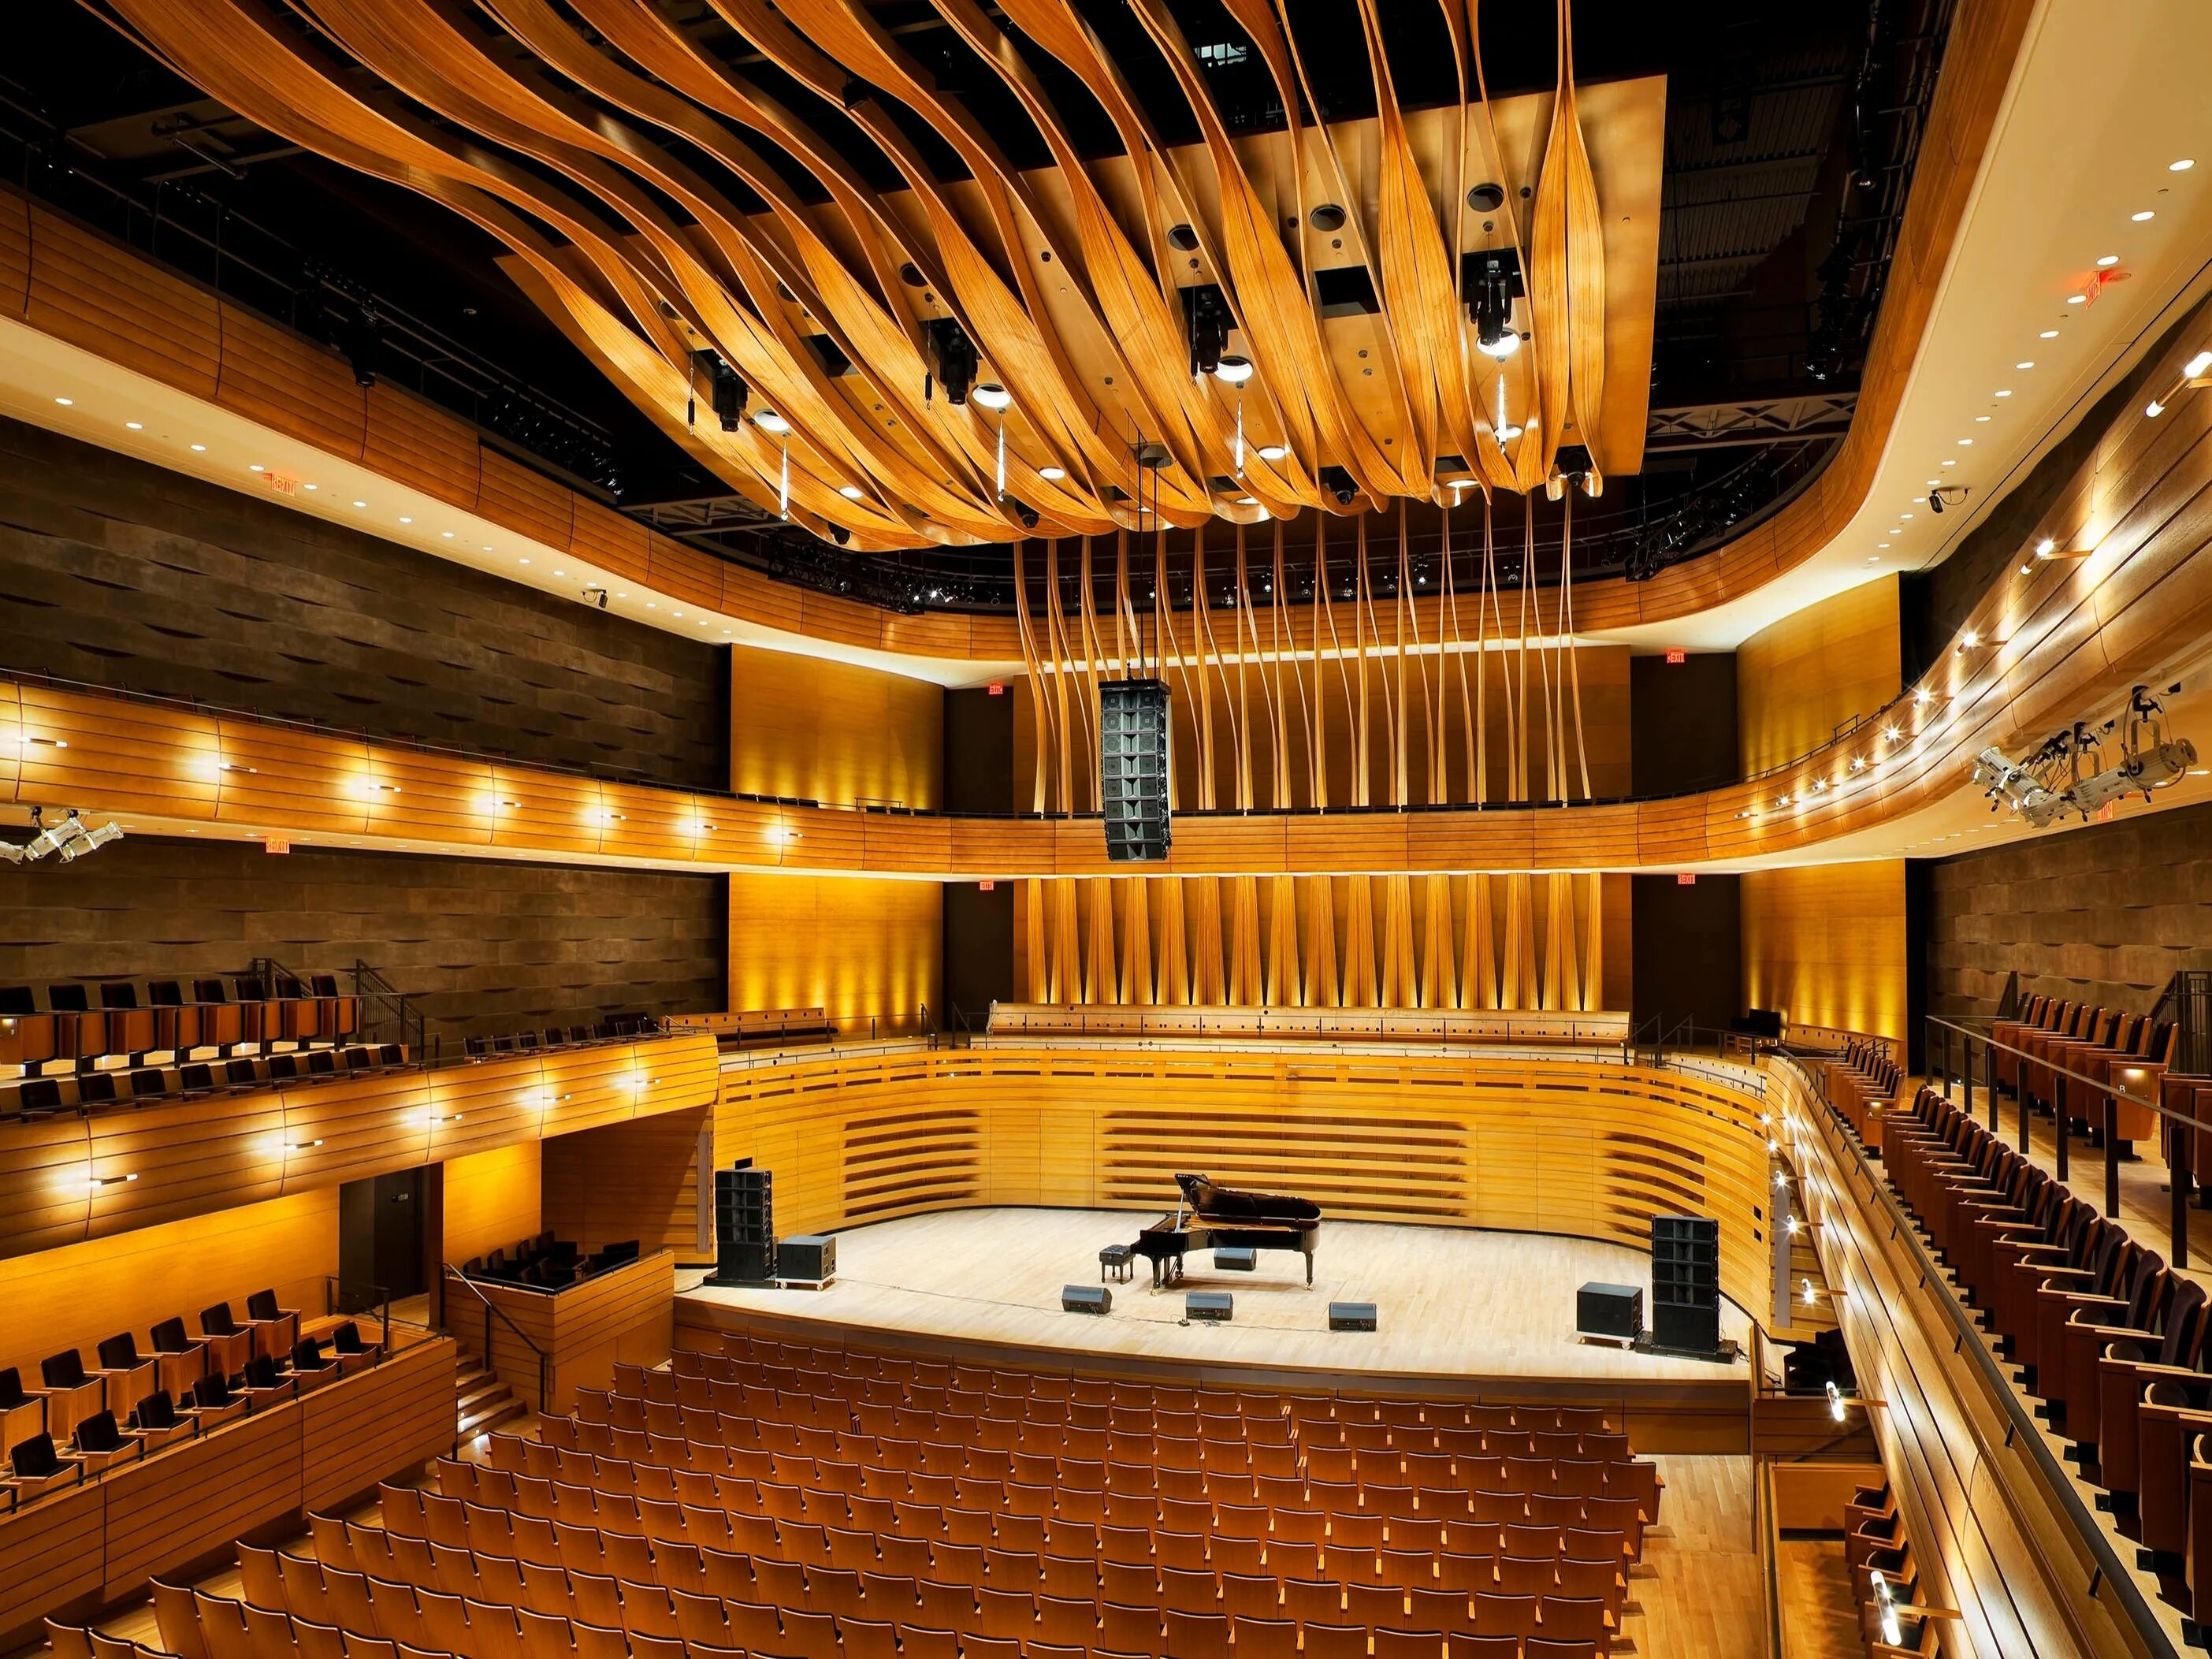 Hall концертный зал. Koerner Hall, Royal Conservatory of Music зал. Концертный зал Торонто. Королевская музыкальная консерватория Торонто. Концертный зал Concert Hall.